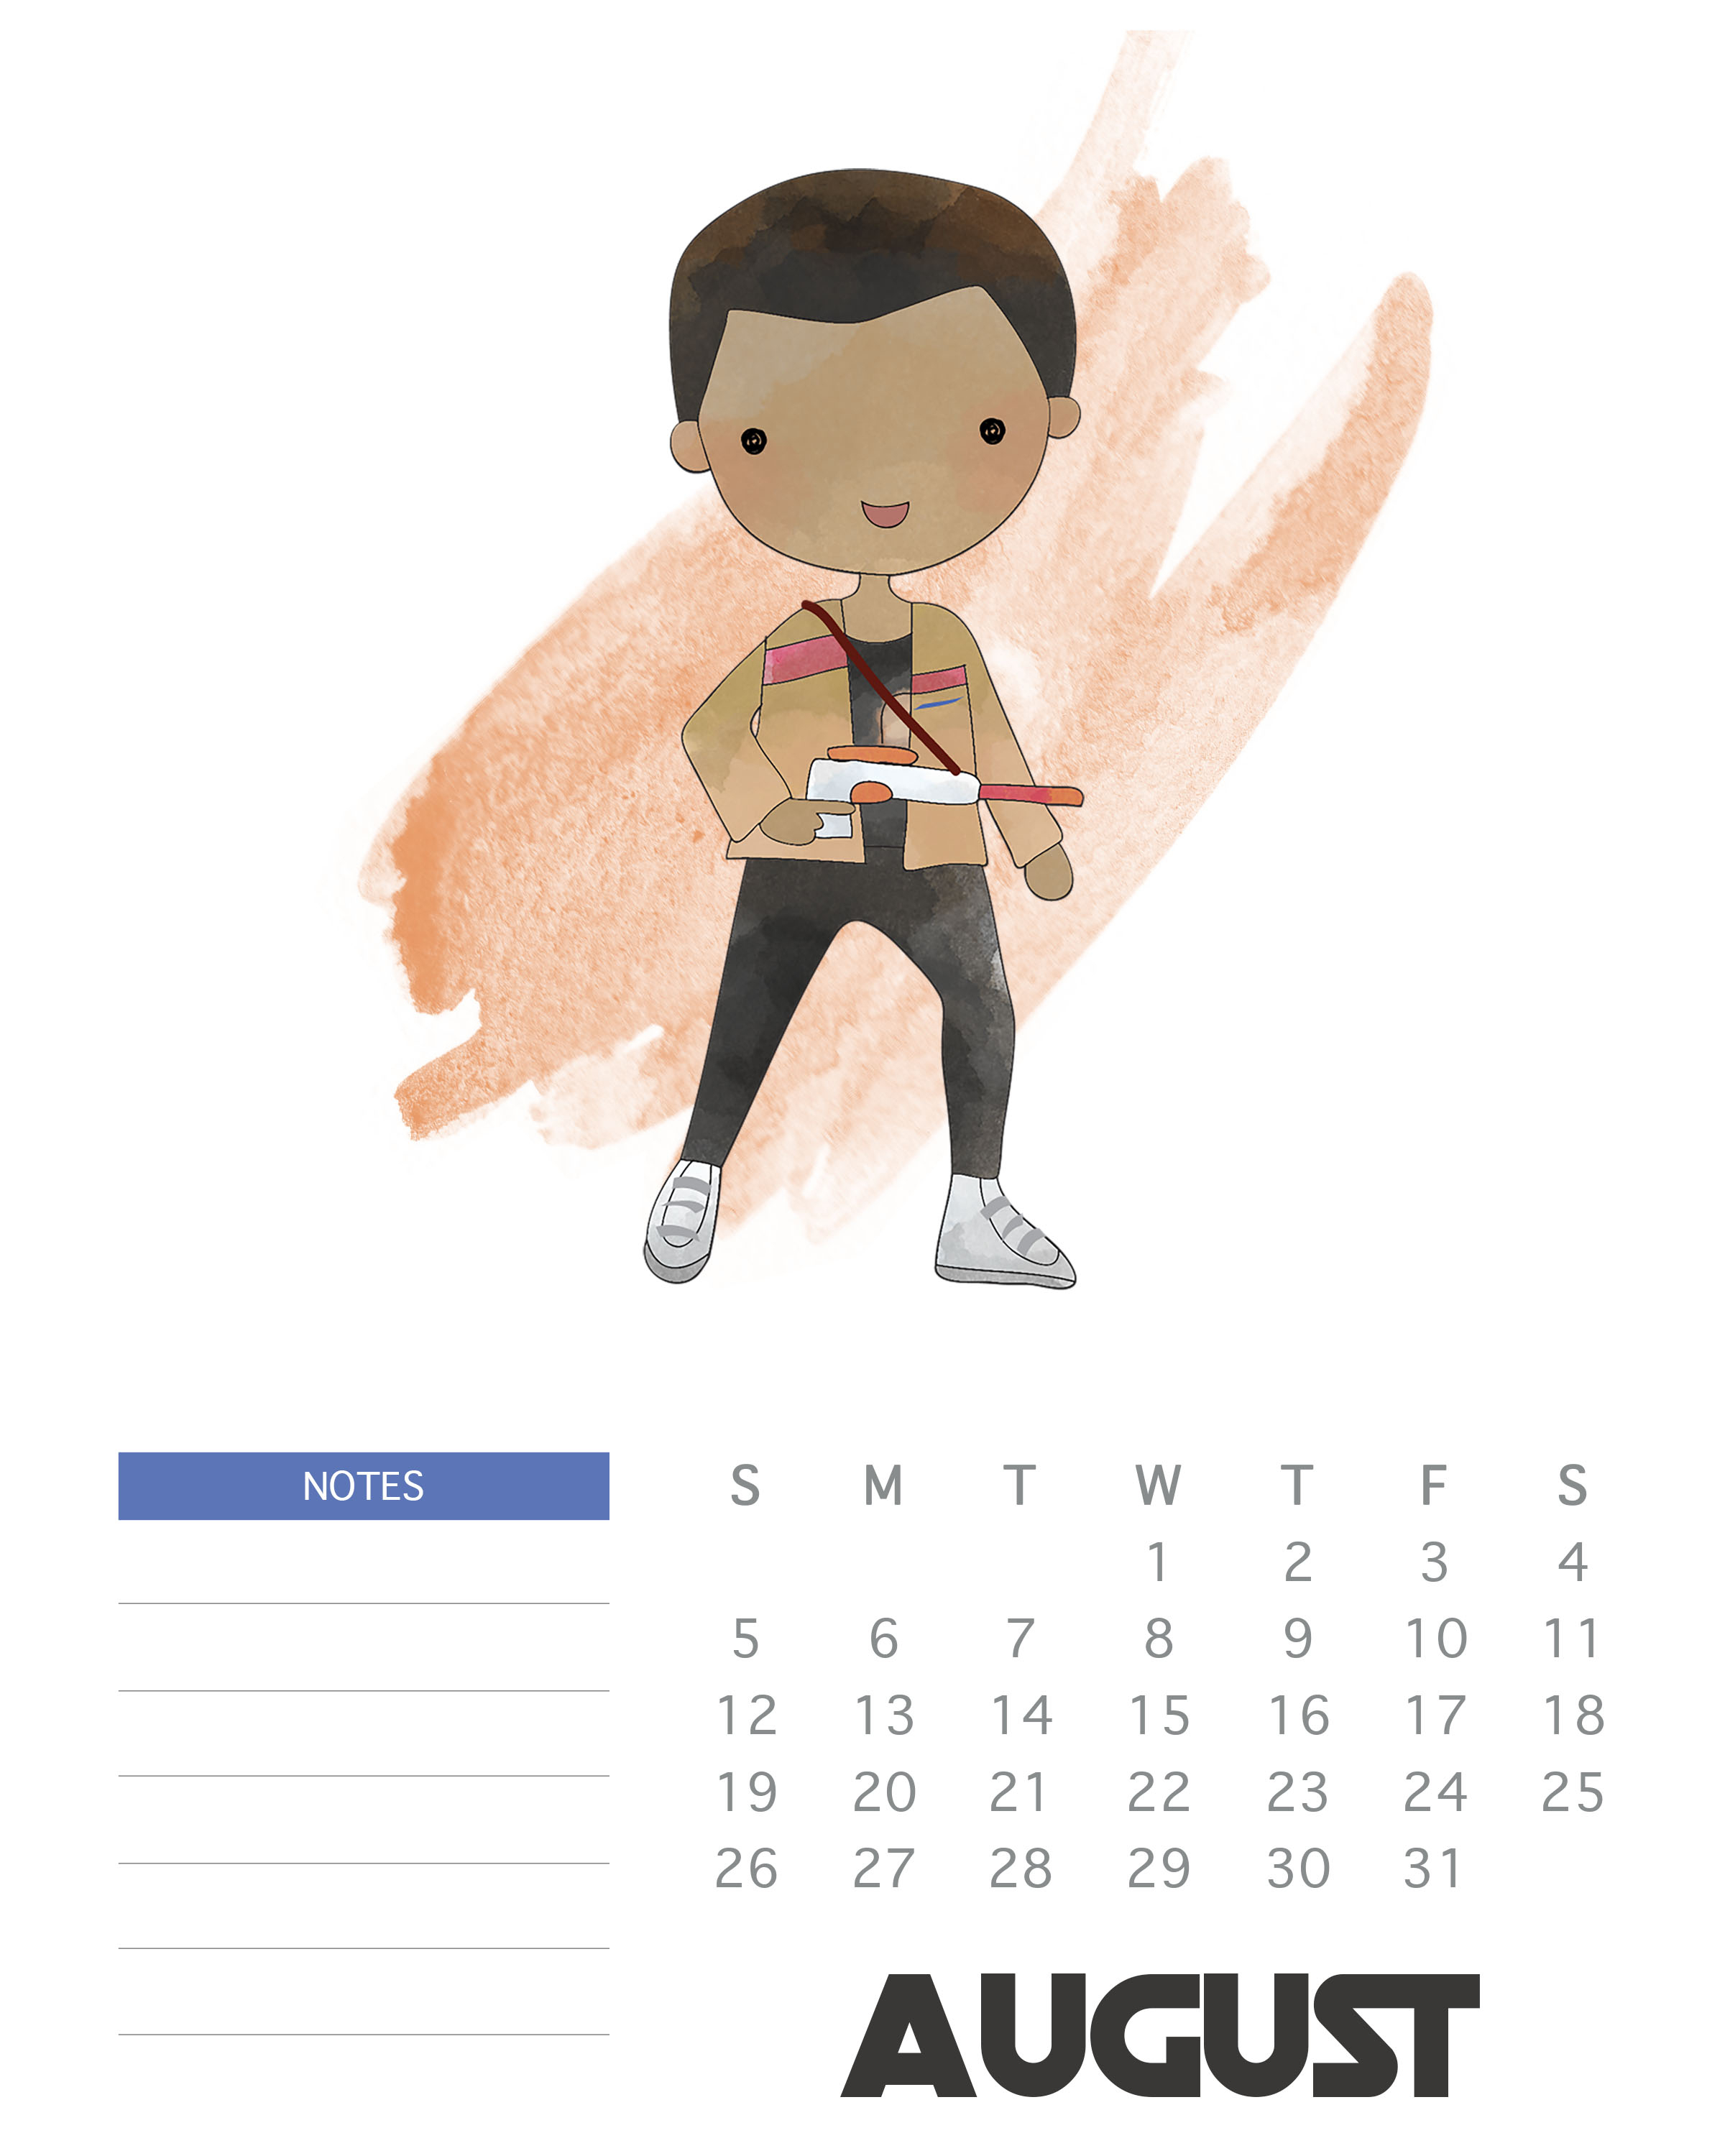 2018 Star Wars Monthly Calendar | Max Calendars inside Star Wars Calendar Printable